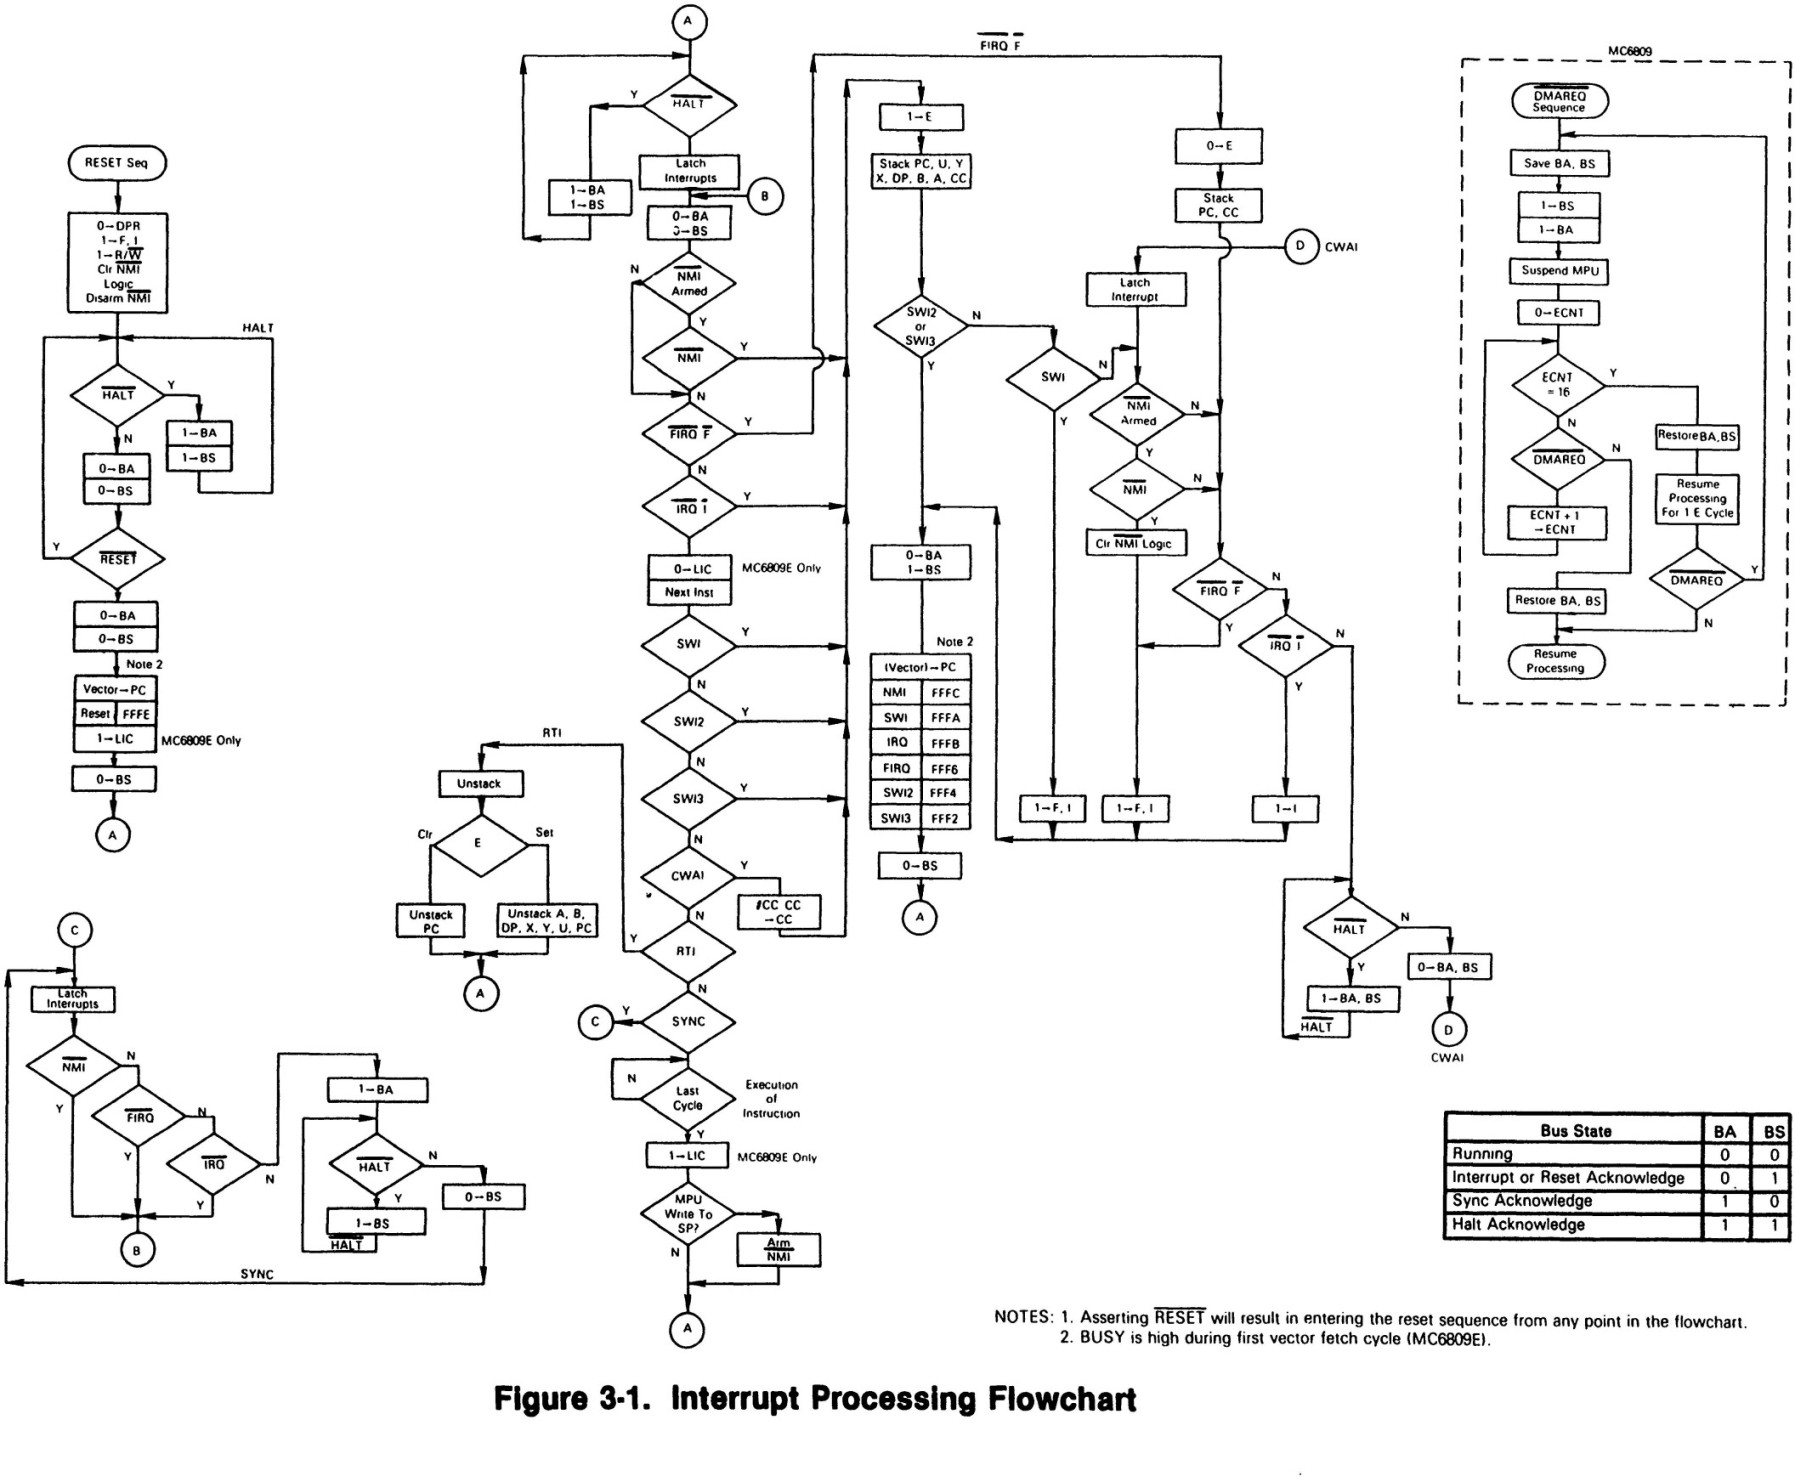 Figure 3-1: Interrupt Processing Flowchart